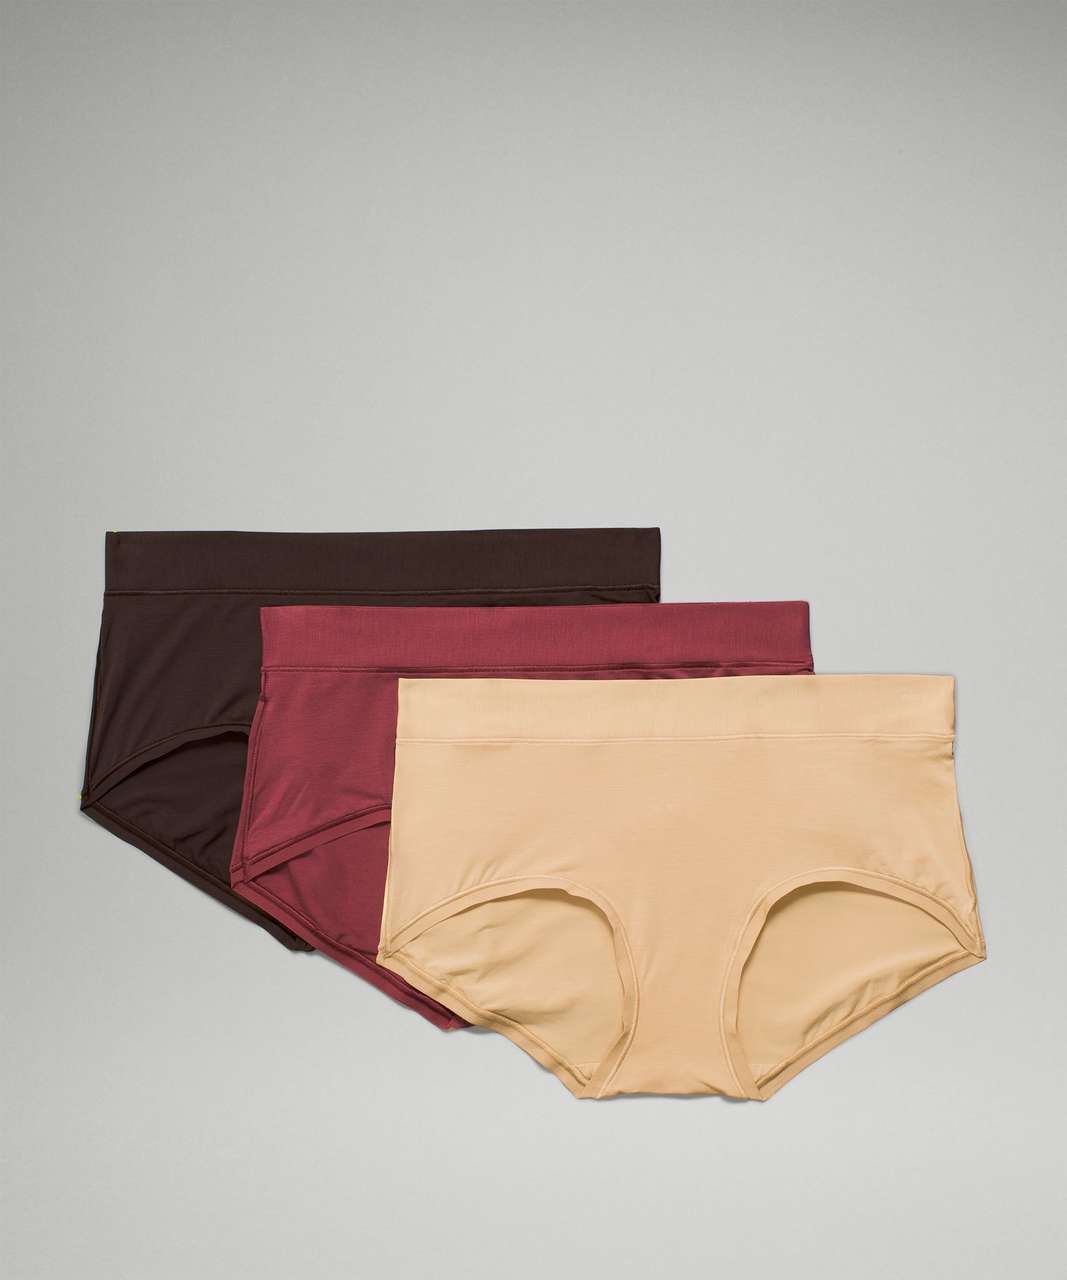 Lululemon UnderEase Mid-Rise Boyshort Underwear 3 Pack - Mulled Wine / Pecan Tan / French Press